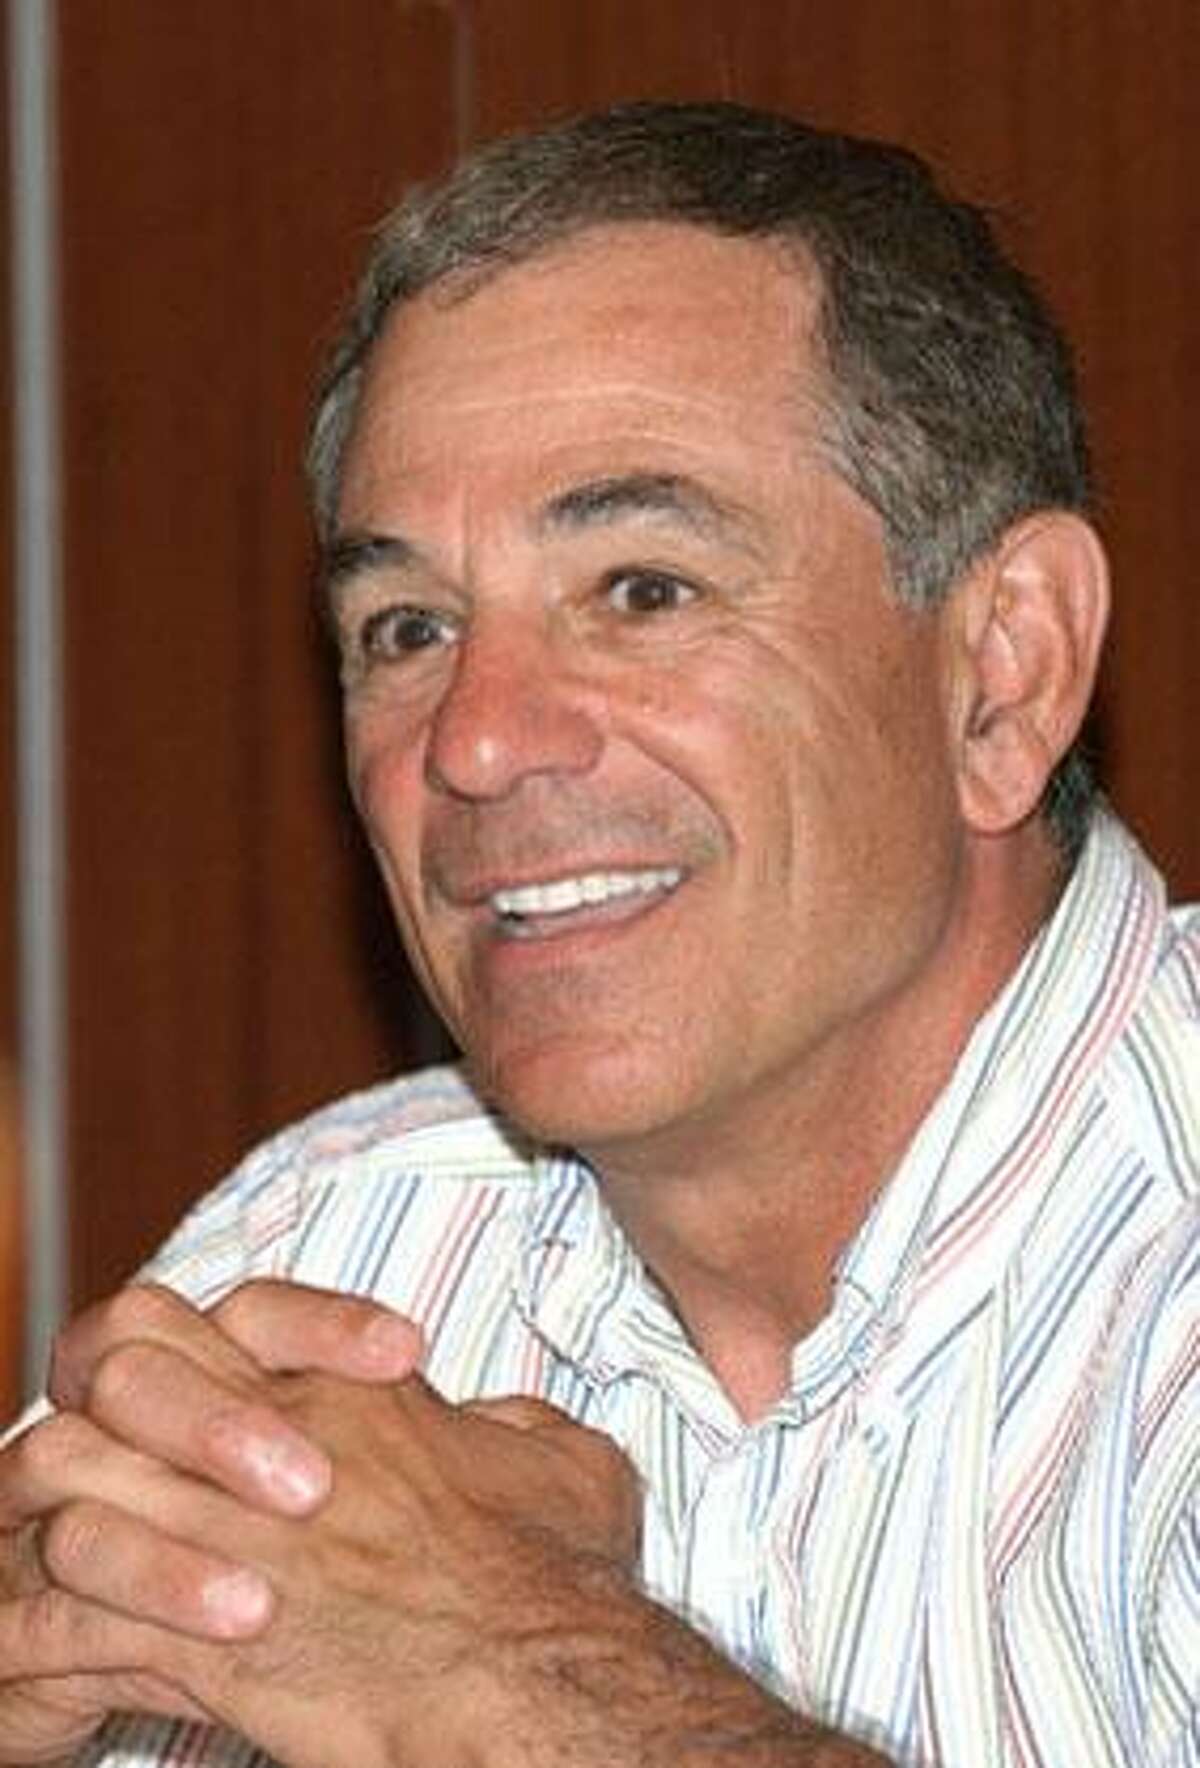 Former New York Mets Manager Bobby Valentine.